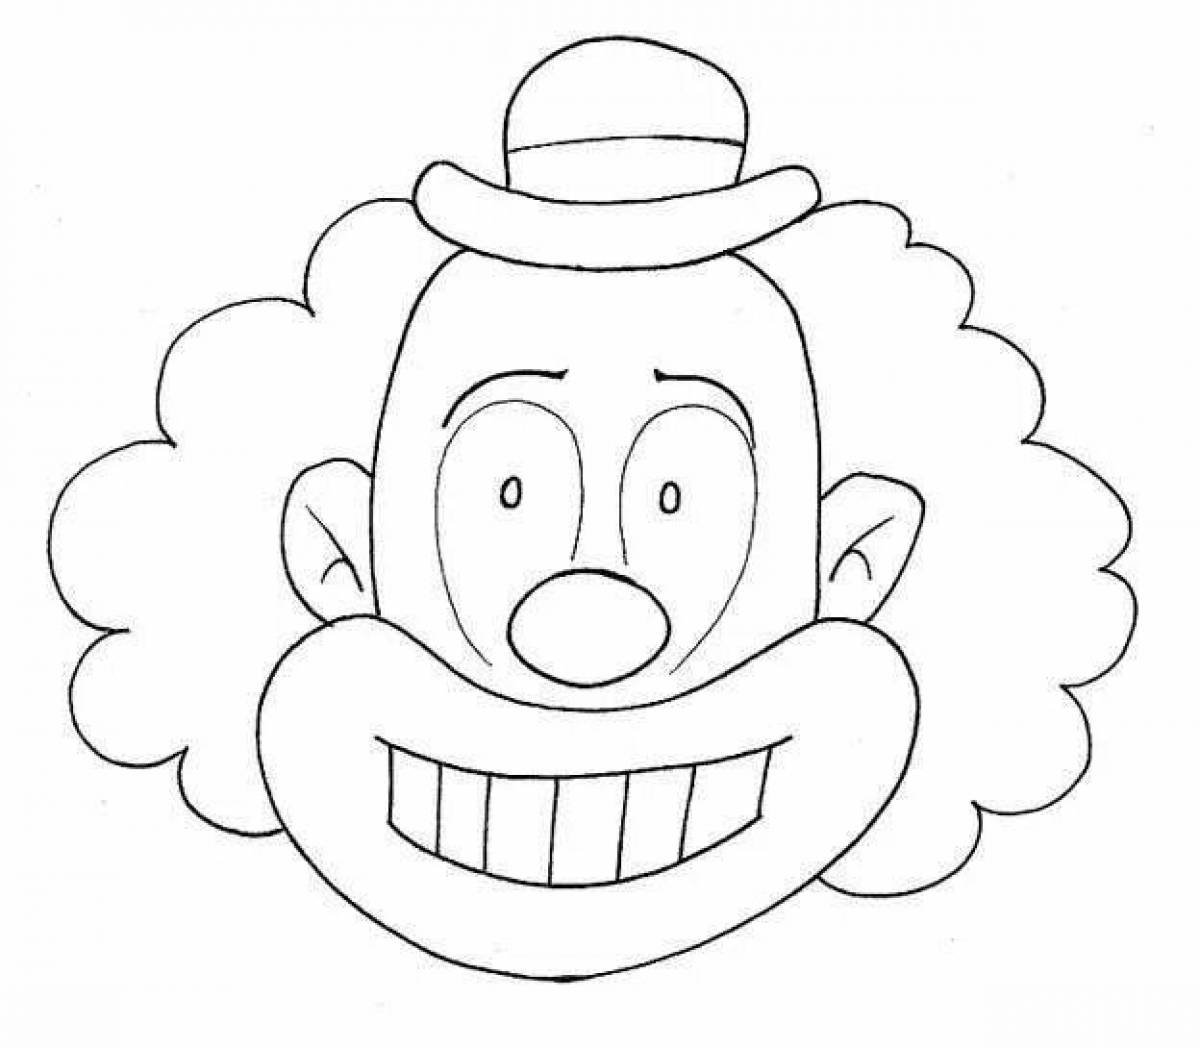 Шаблон клоуна для аппликации для детей. Клоун раскраска. Клоун раскраска для детей. Веселый клоун раскраска. Голова клоуна раскраска.